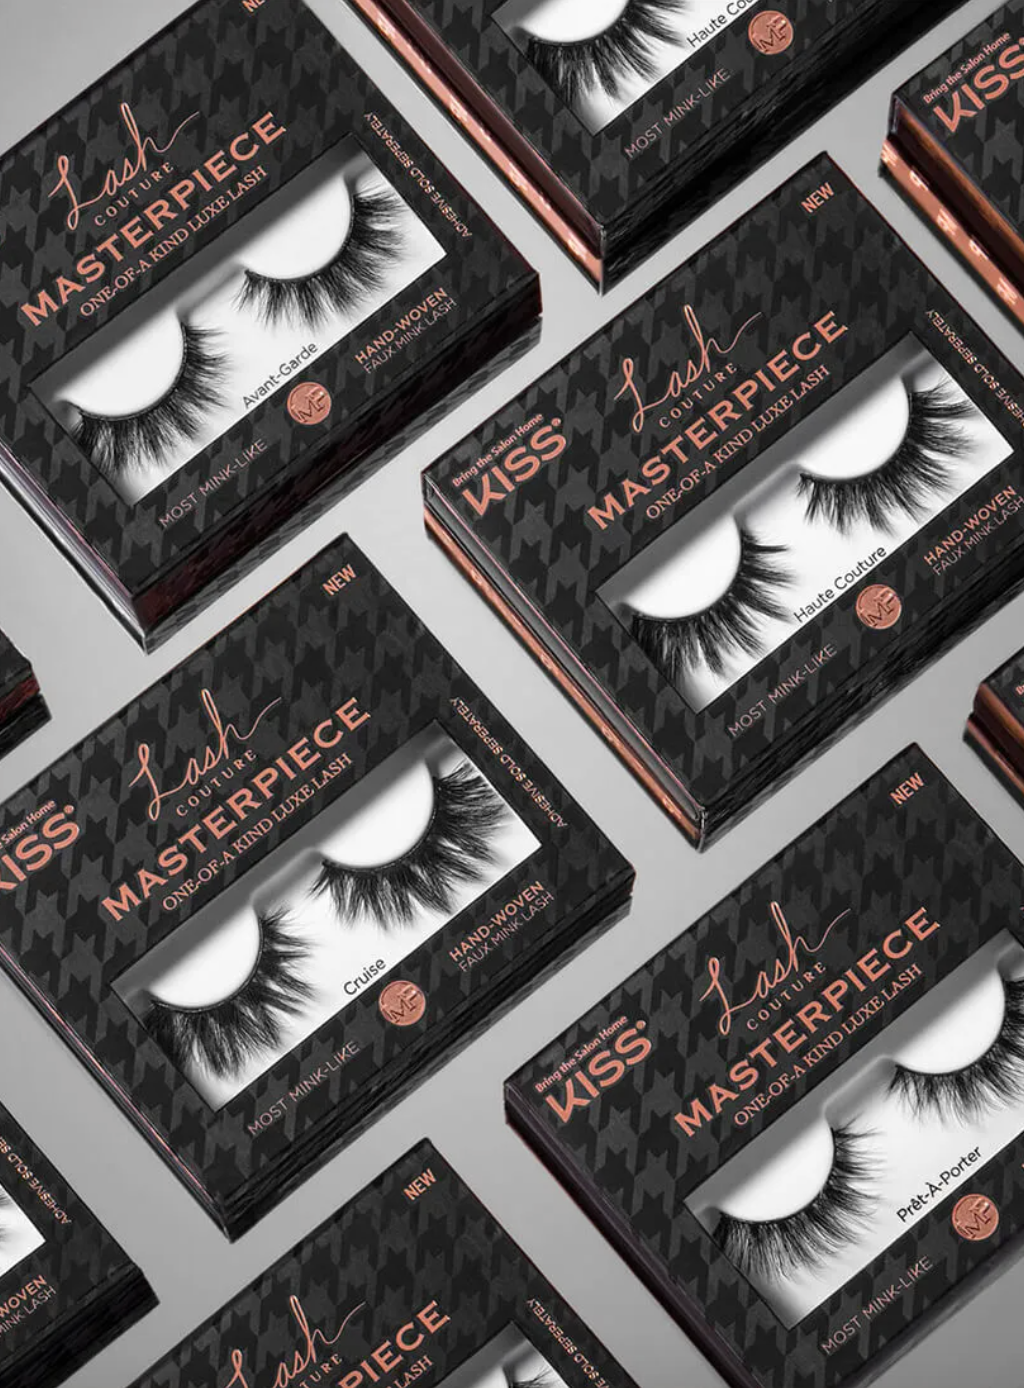 multiple packages of kiss fake eyelashes